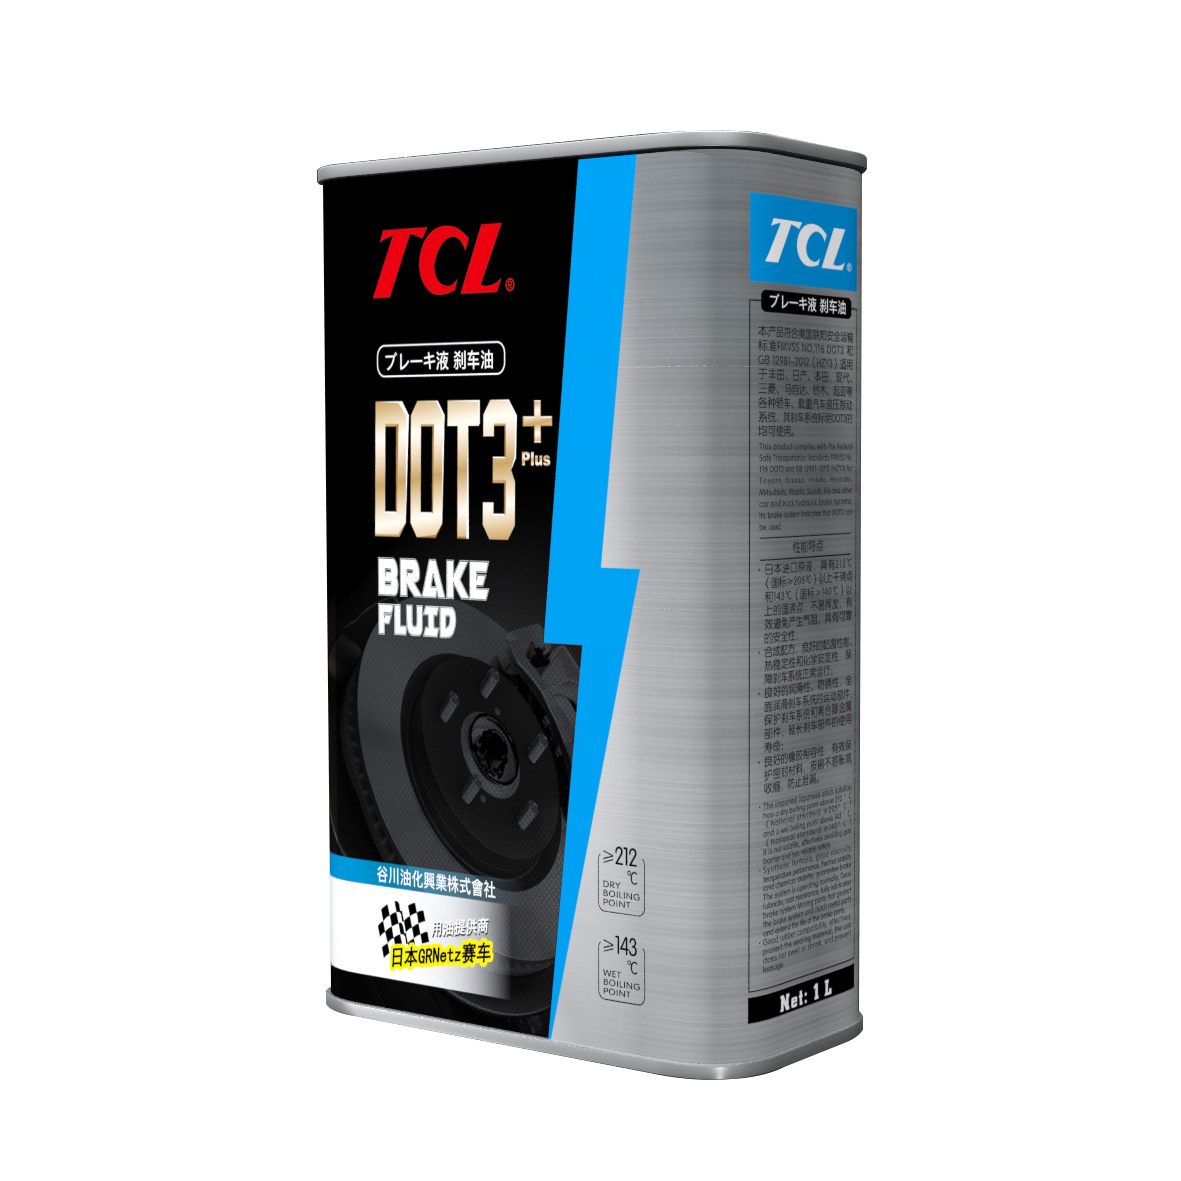 TCL - Brake Fluid DOT 3+